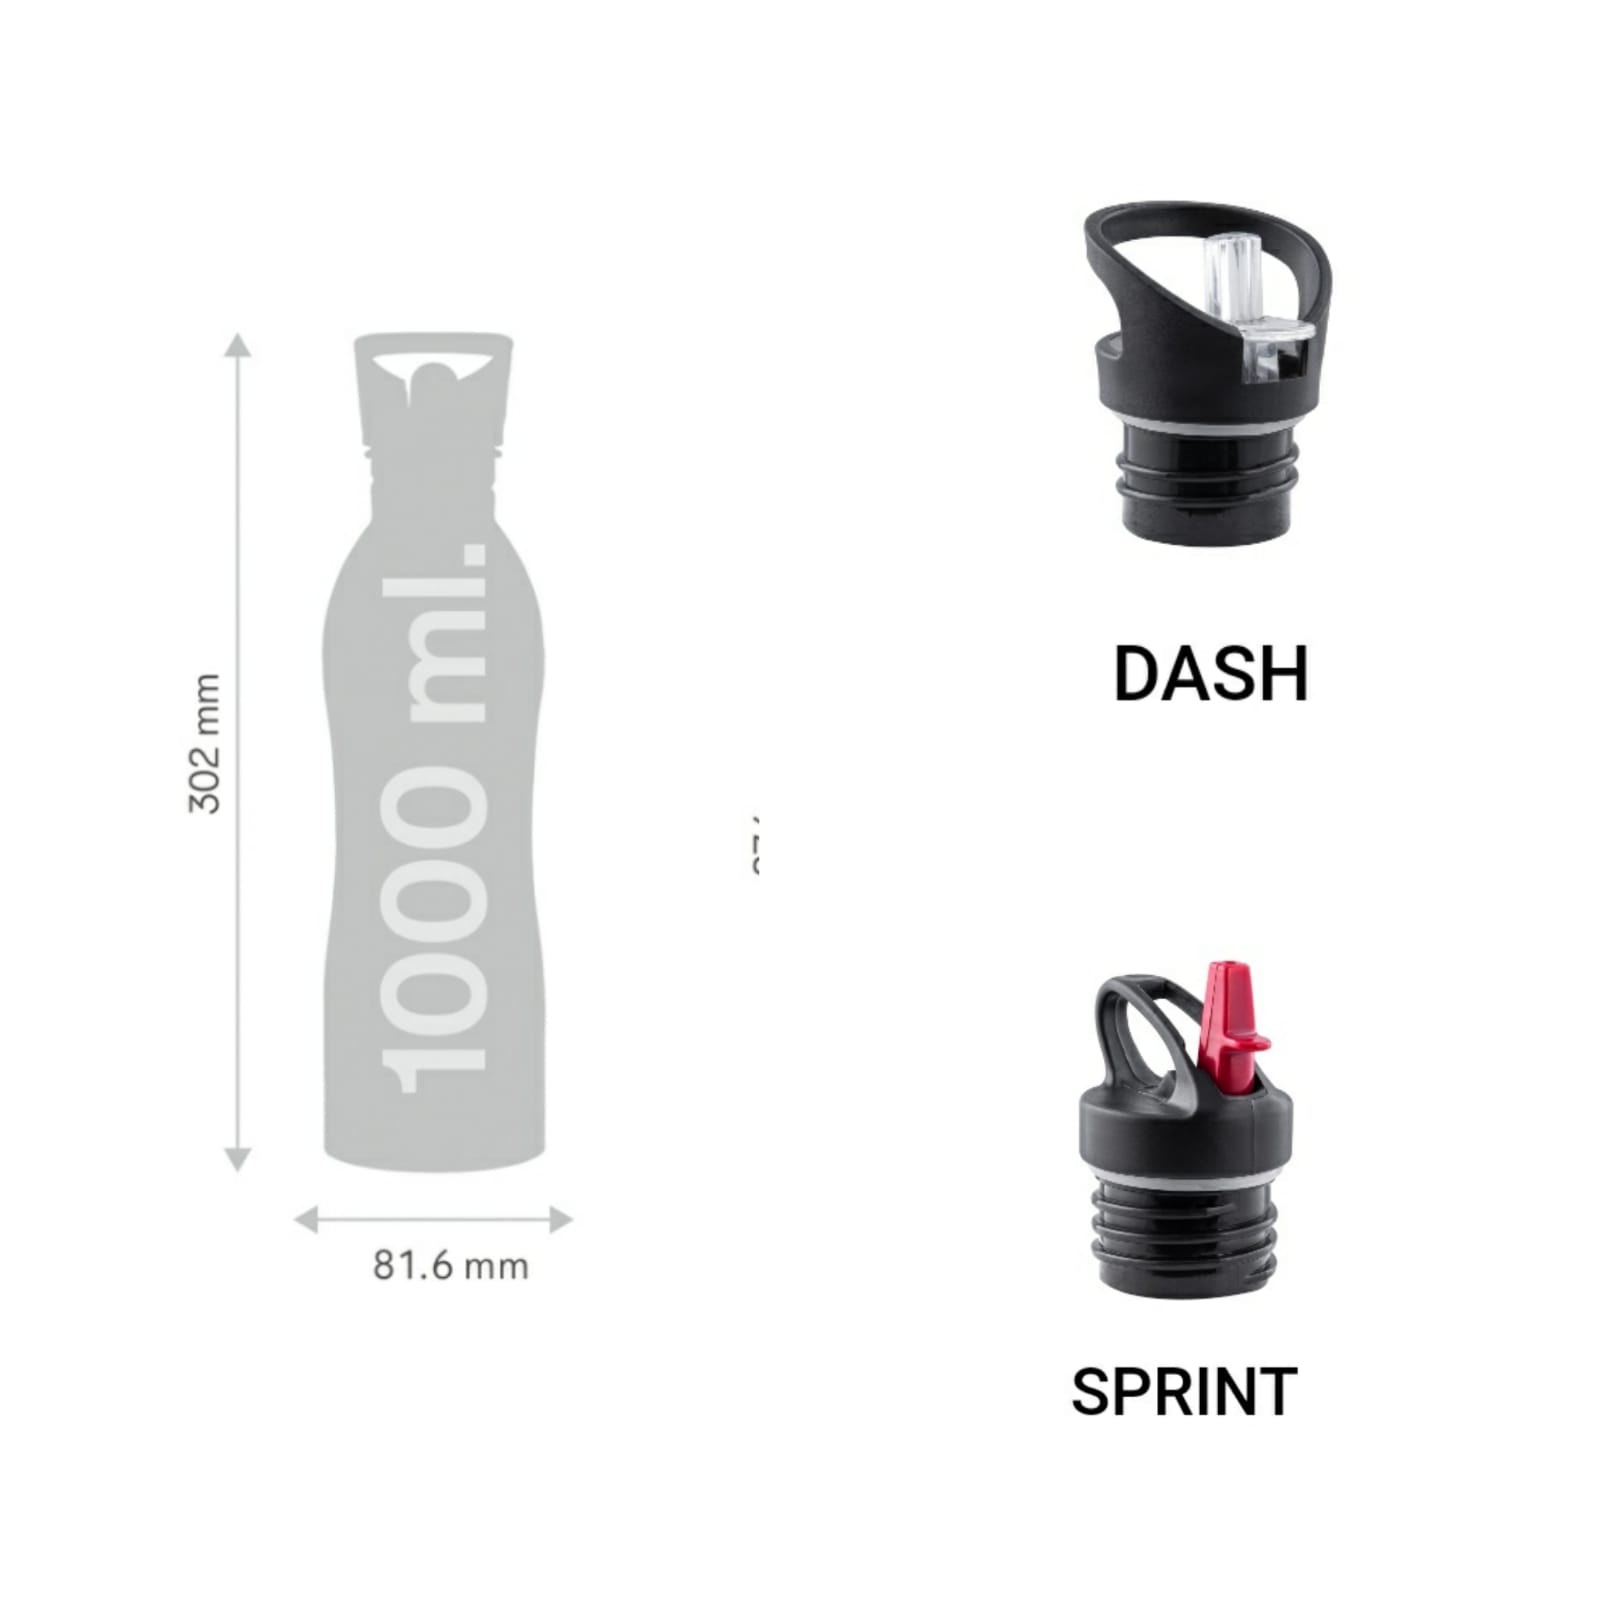 Nanobot Sports Stainless Steel Bottle Dash lid 1000ml - Colour - 1 piece 